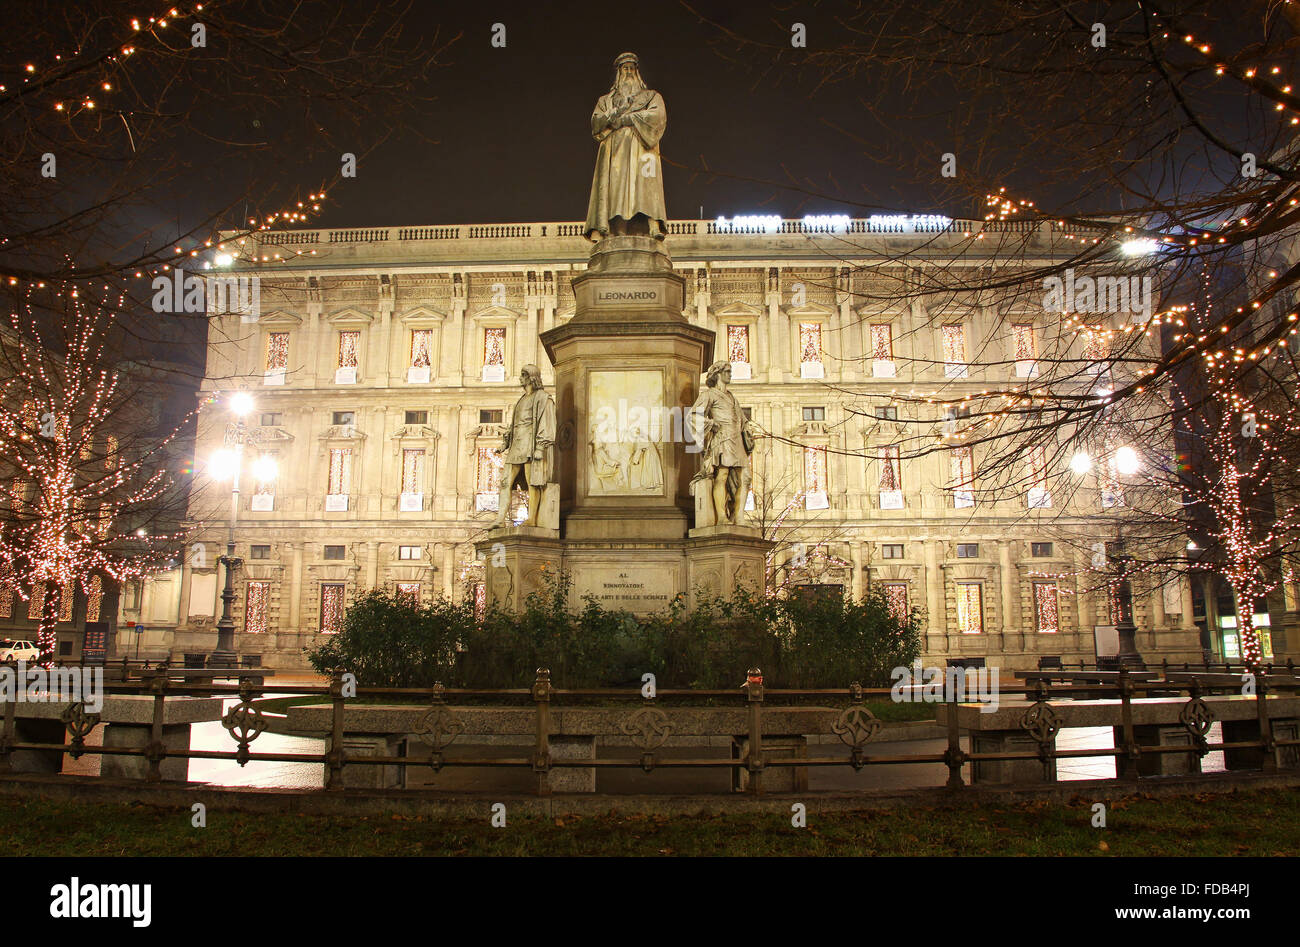 Leonardo's monument on Piazza Della Scala at night. Milan, Italy Stock Photo